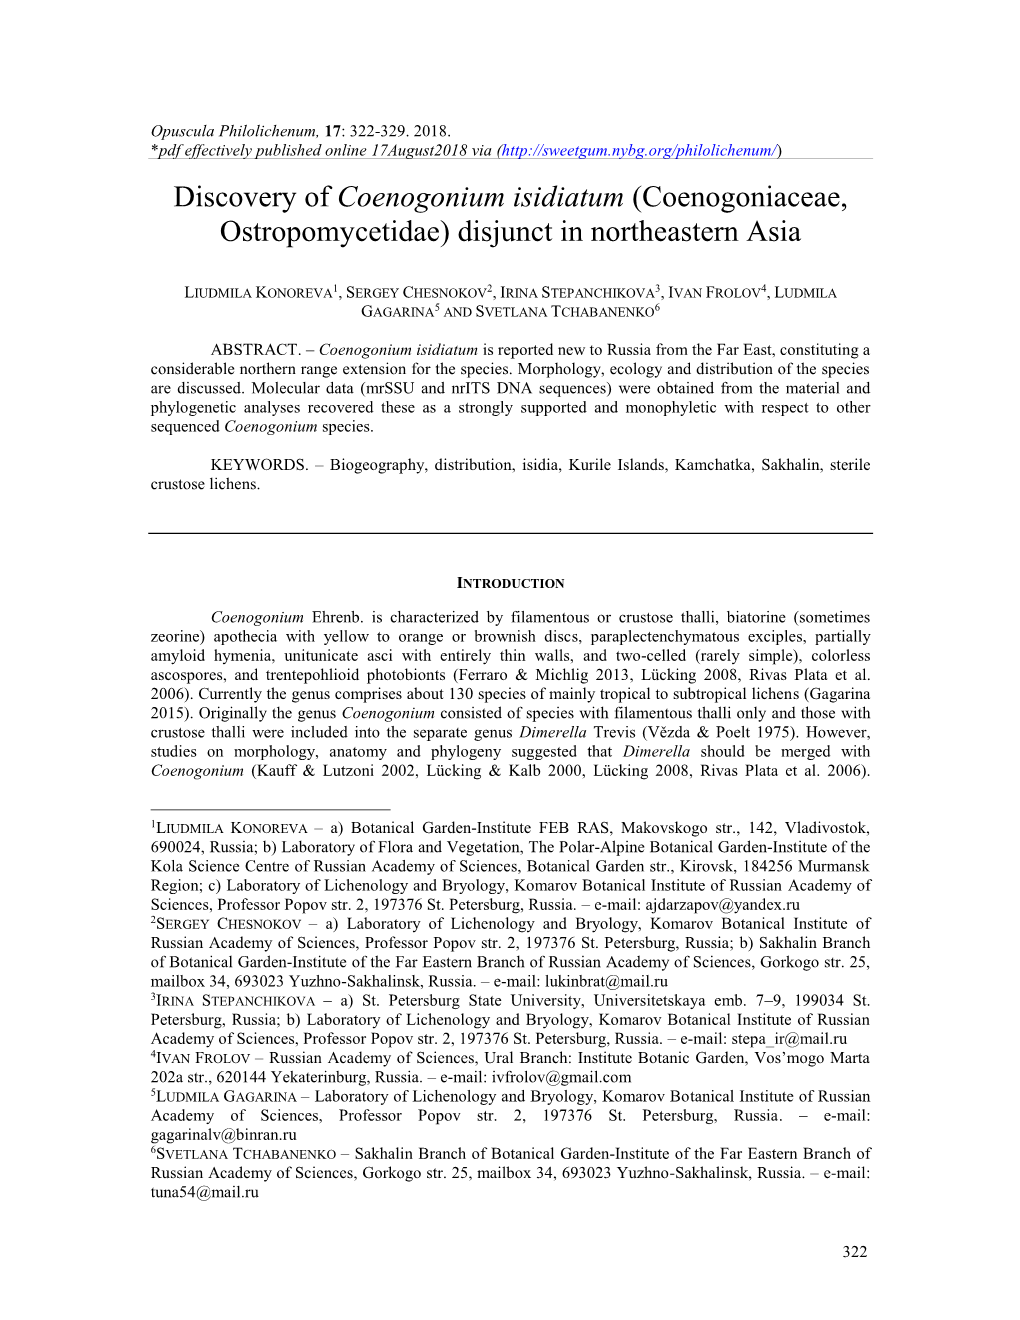 Discovery of Coenogonium Isidiatum (Coenogoniaceae, Ostropomycetidae) Disjunct in Northeastern Asia